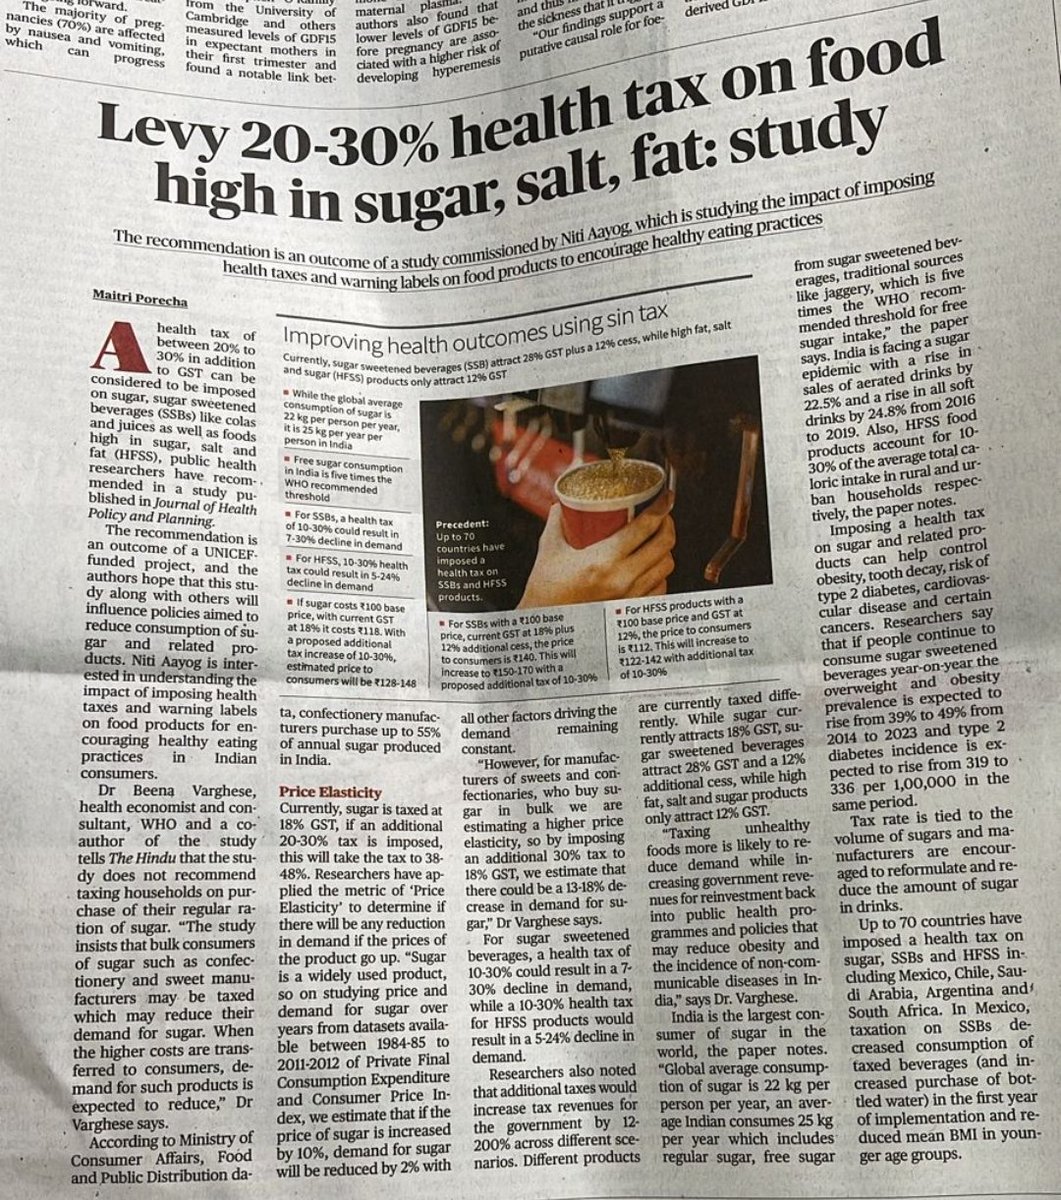 Levy 20-30% health tax on food high in sugar, salt, fat: study also need investment in #NutritionLiteracy thehindu.com/sci-tech/scien…
@Moveribfan @NeelaSaldanha 
@SBarquera @patralekha2011 
@jamuda_ranglal @sujeetranjan
@basantak  @KavitaDatt @kavyasvoice @sak